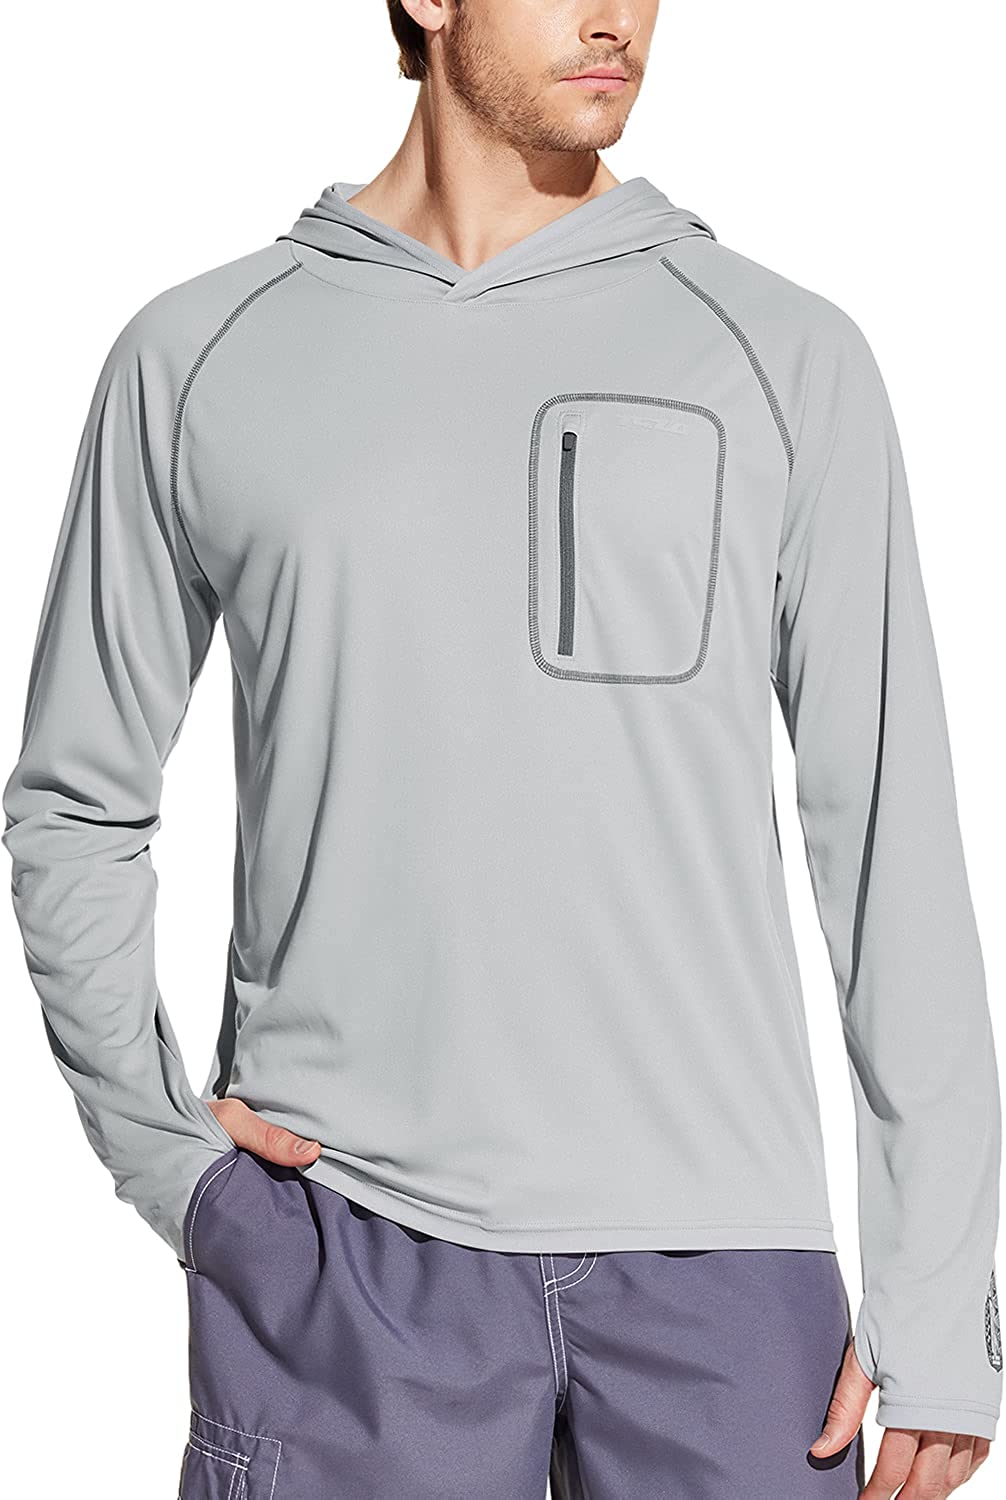 SPF/UV Loose-Fit Short Sleeve Shirts Details about   TSLA Men's Rashguard Swim Shirts UPF 50 